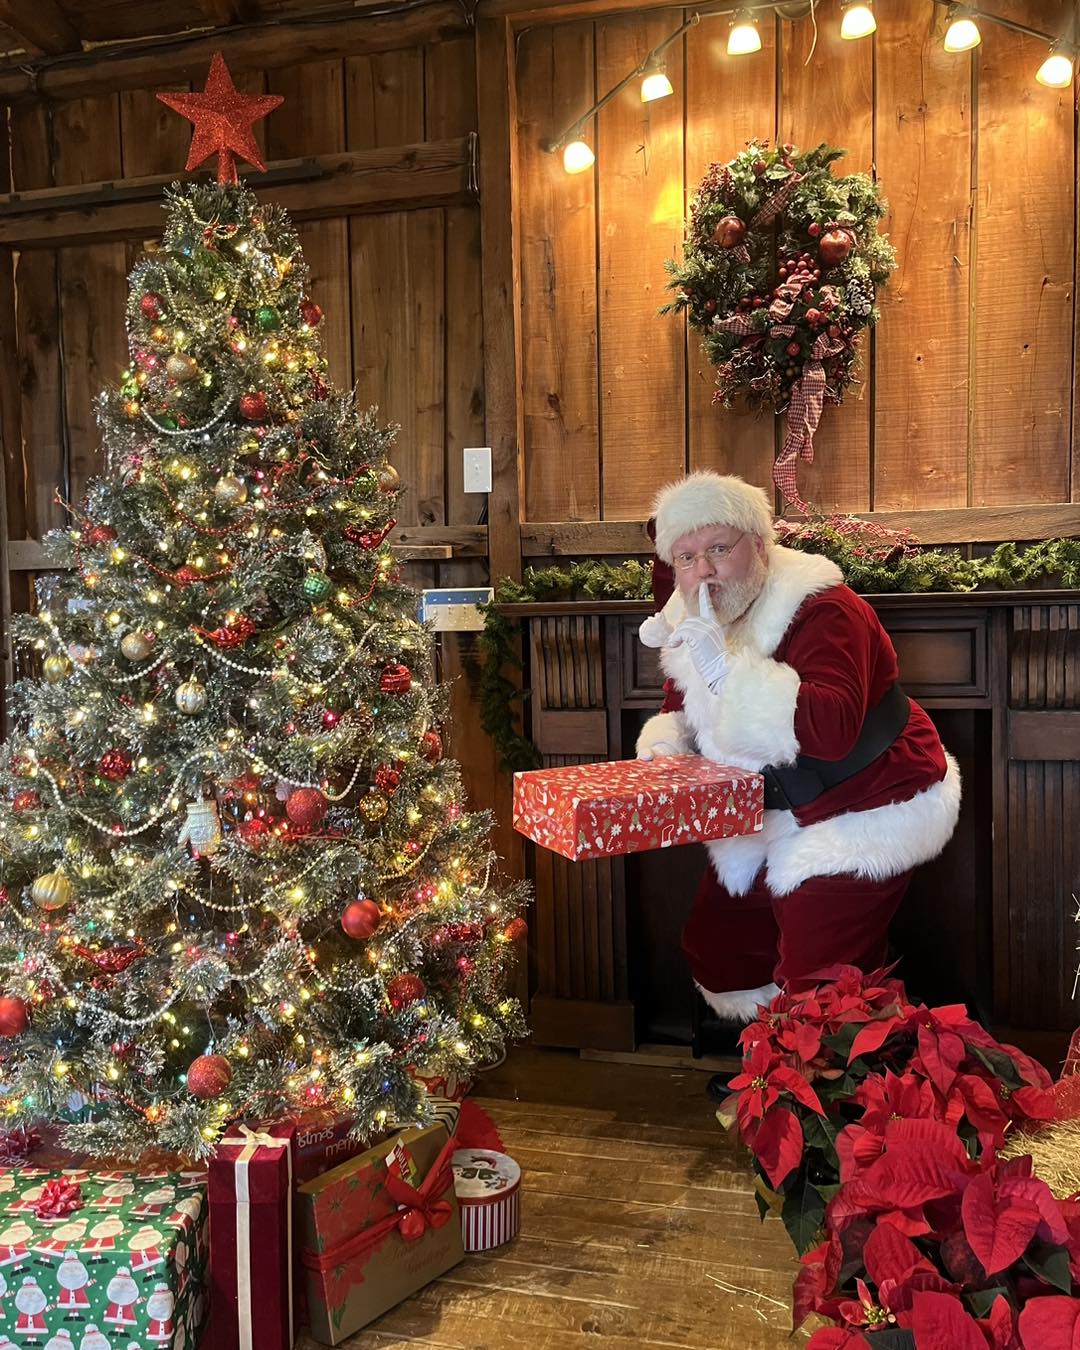 Santa putting a present under the tree